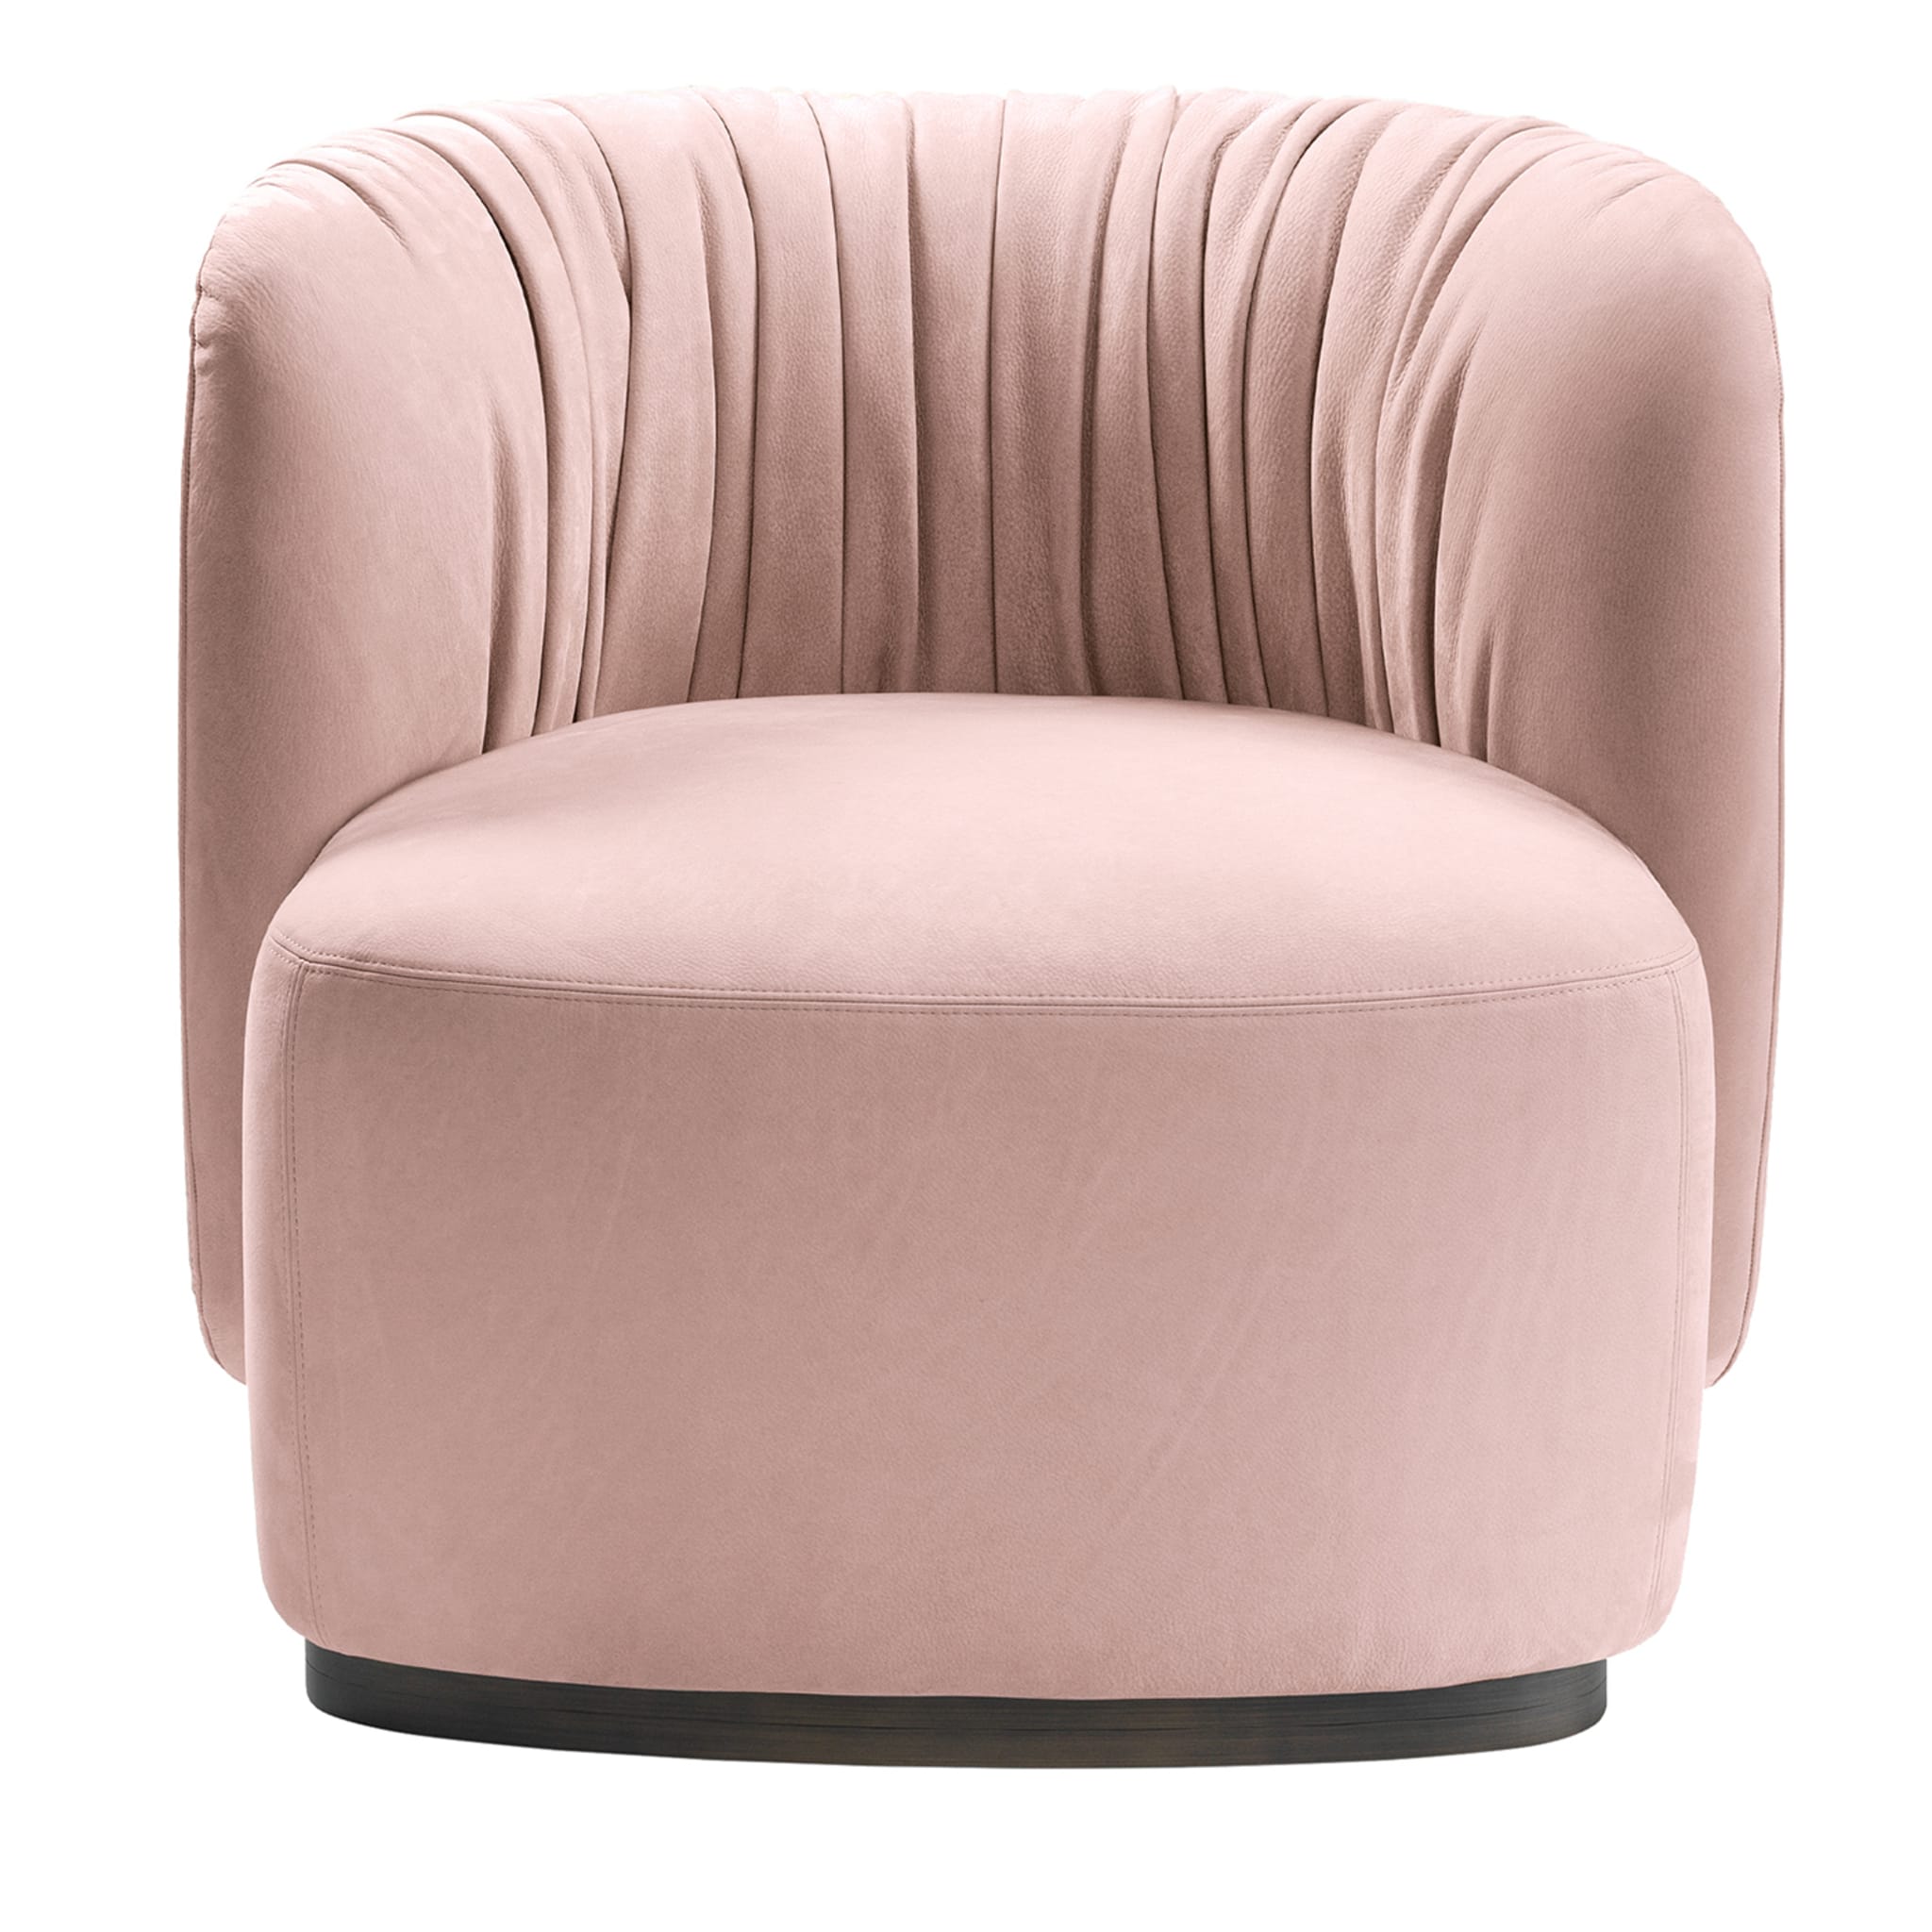 Sipario Pink Armchair by Lorenza Bozzoli - Main view